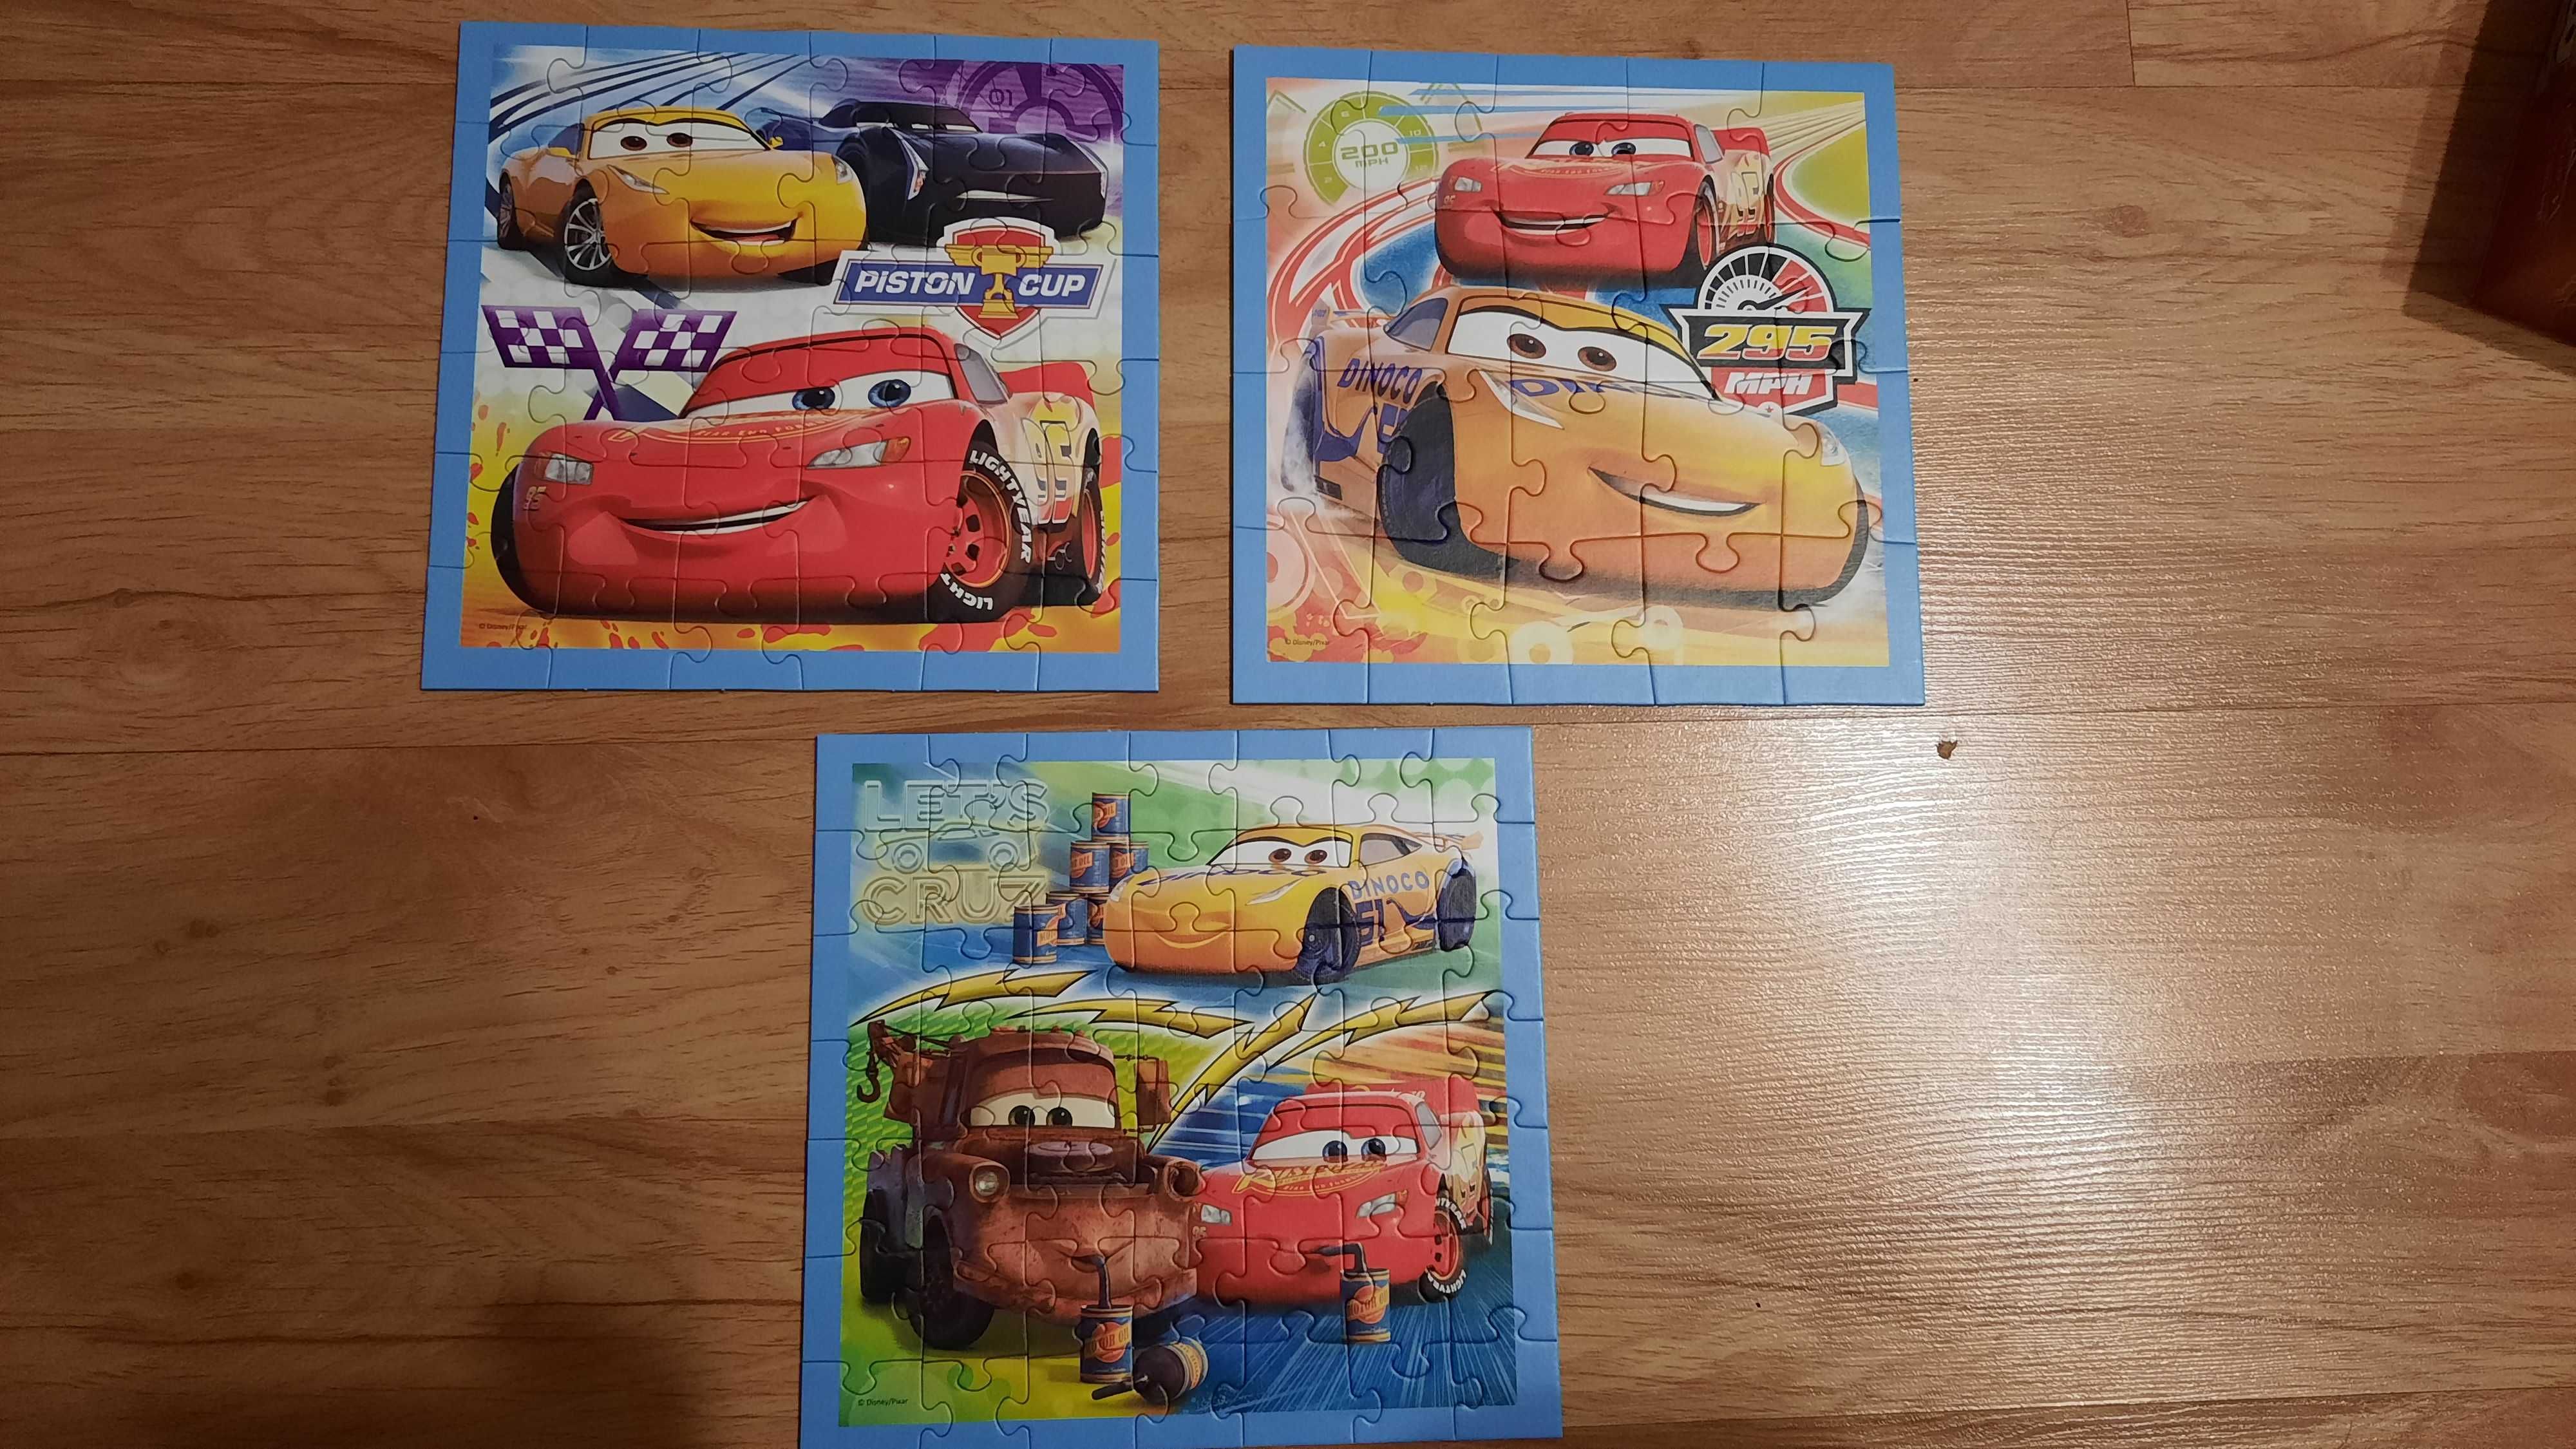 Puzzle Trefl Pixar Cars 3 w 1 34848